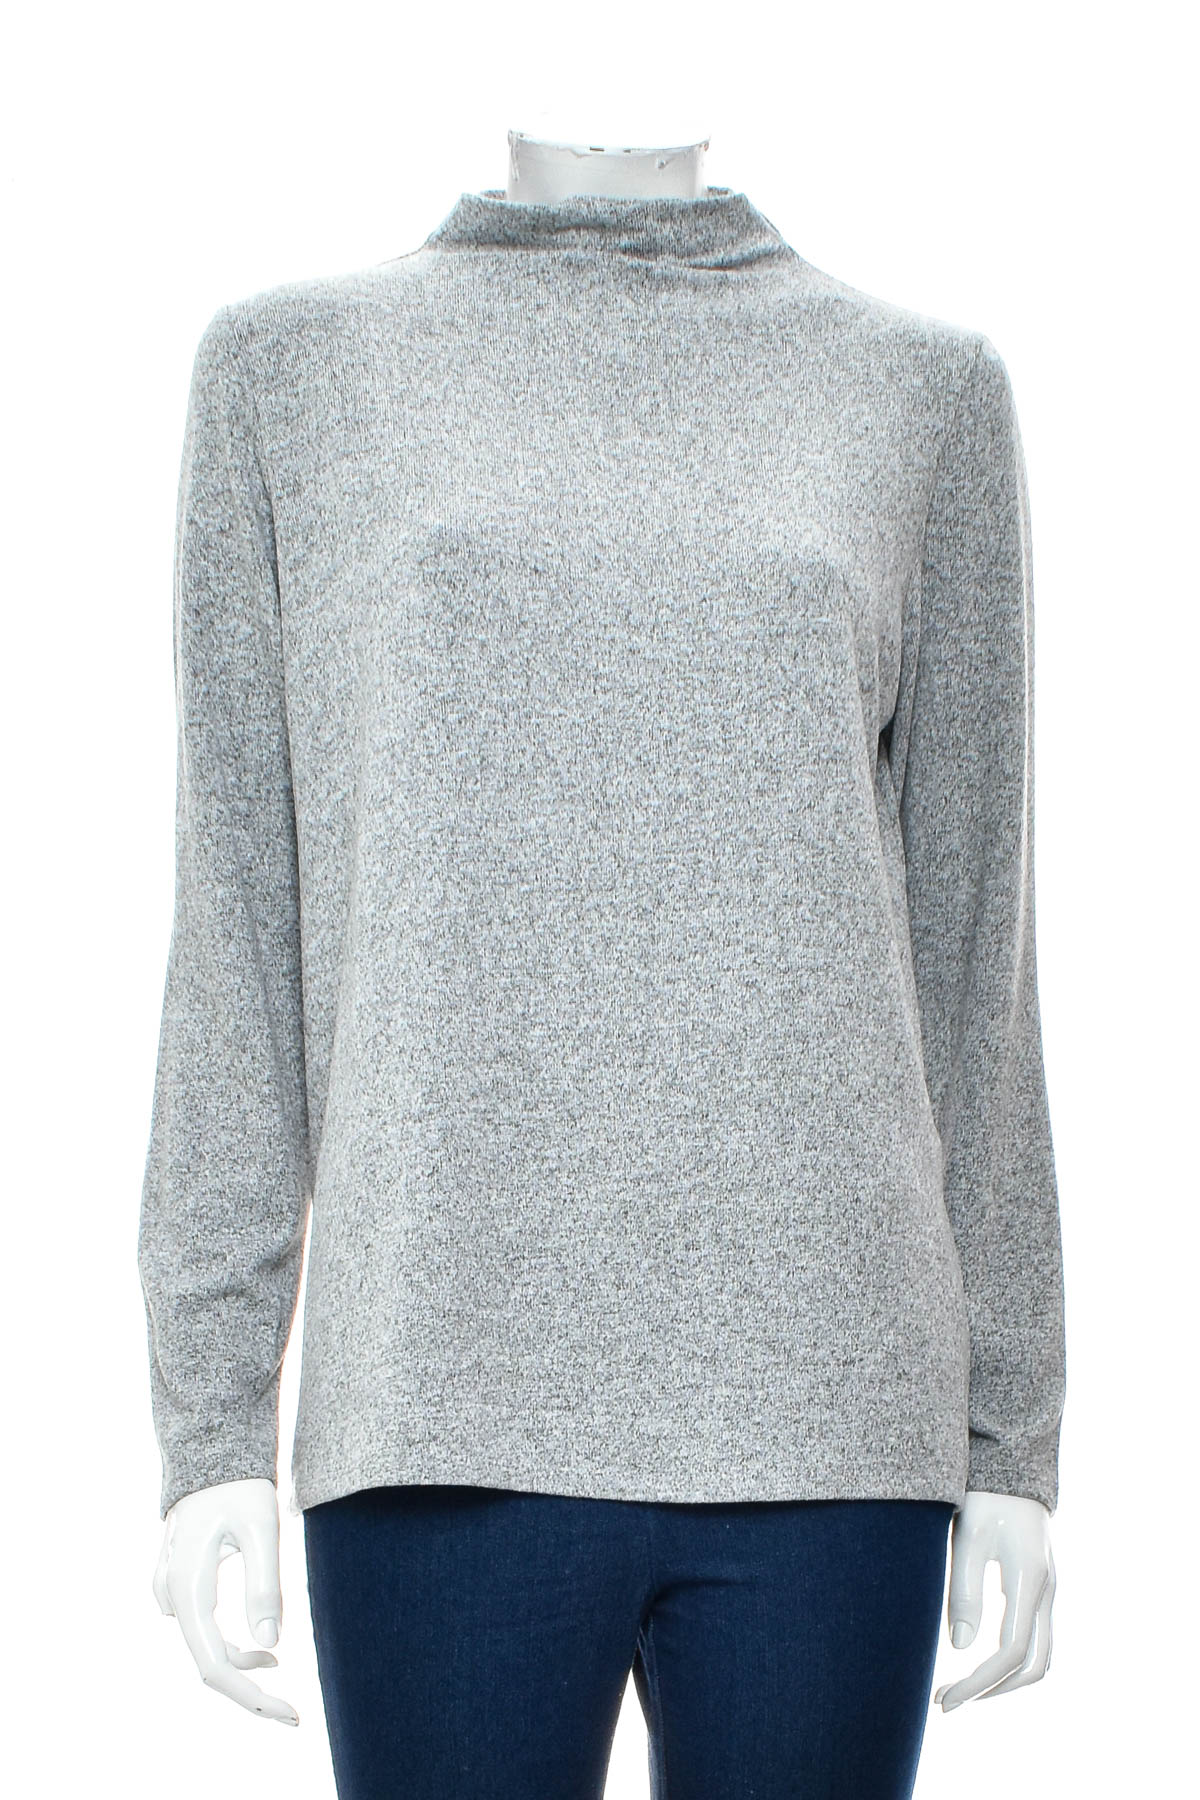 Women's sweater - Target - 0